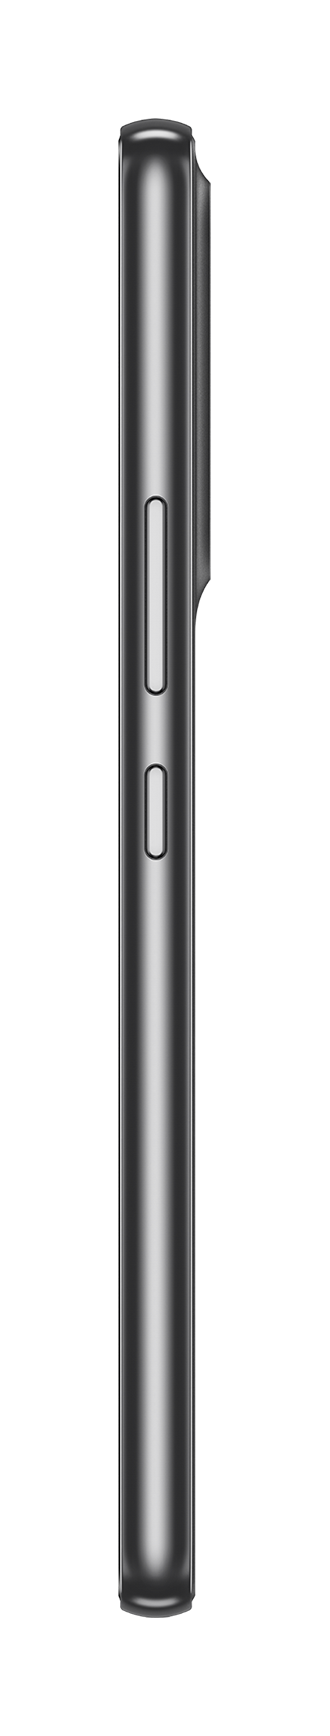 Samsung A53 black side